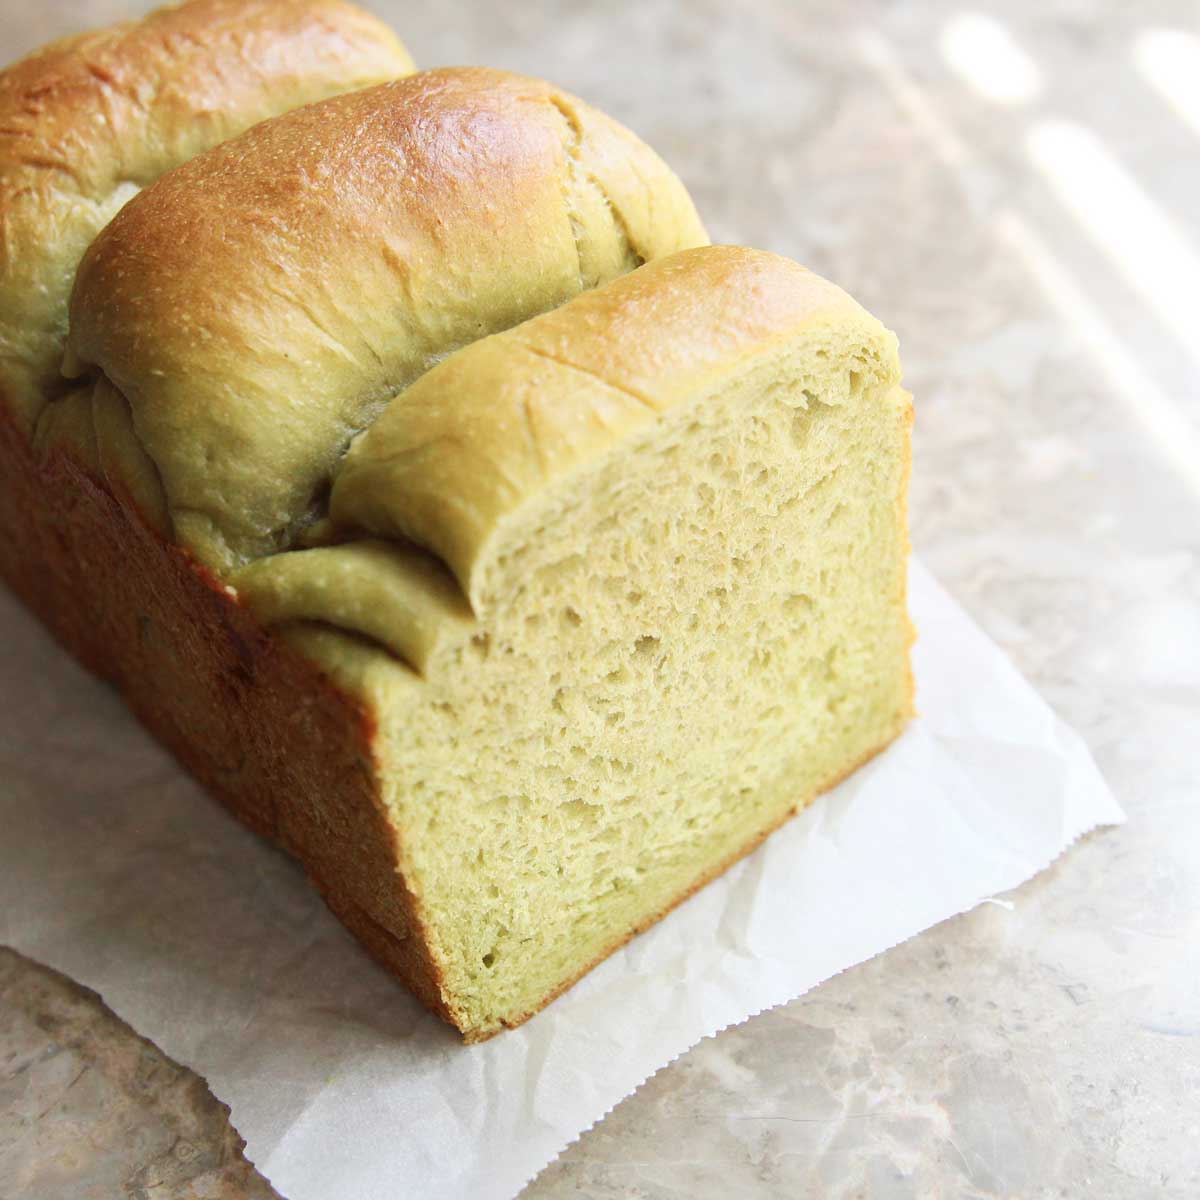 Soft & Fluffy Vegan Avocado Bread (Yeast Bread) Recipe - Sweet Matcha Whipped Cream